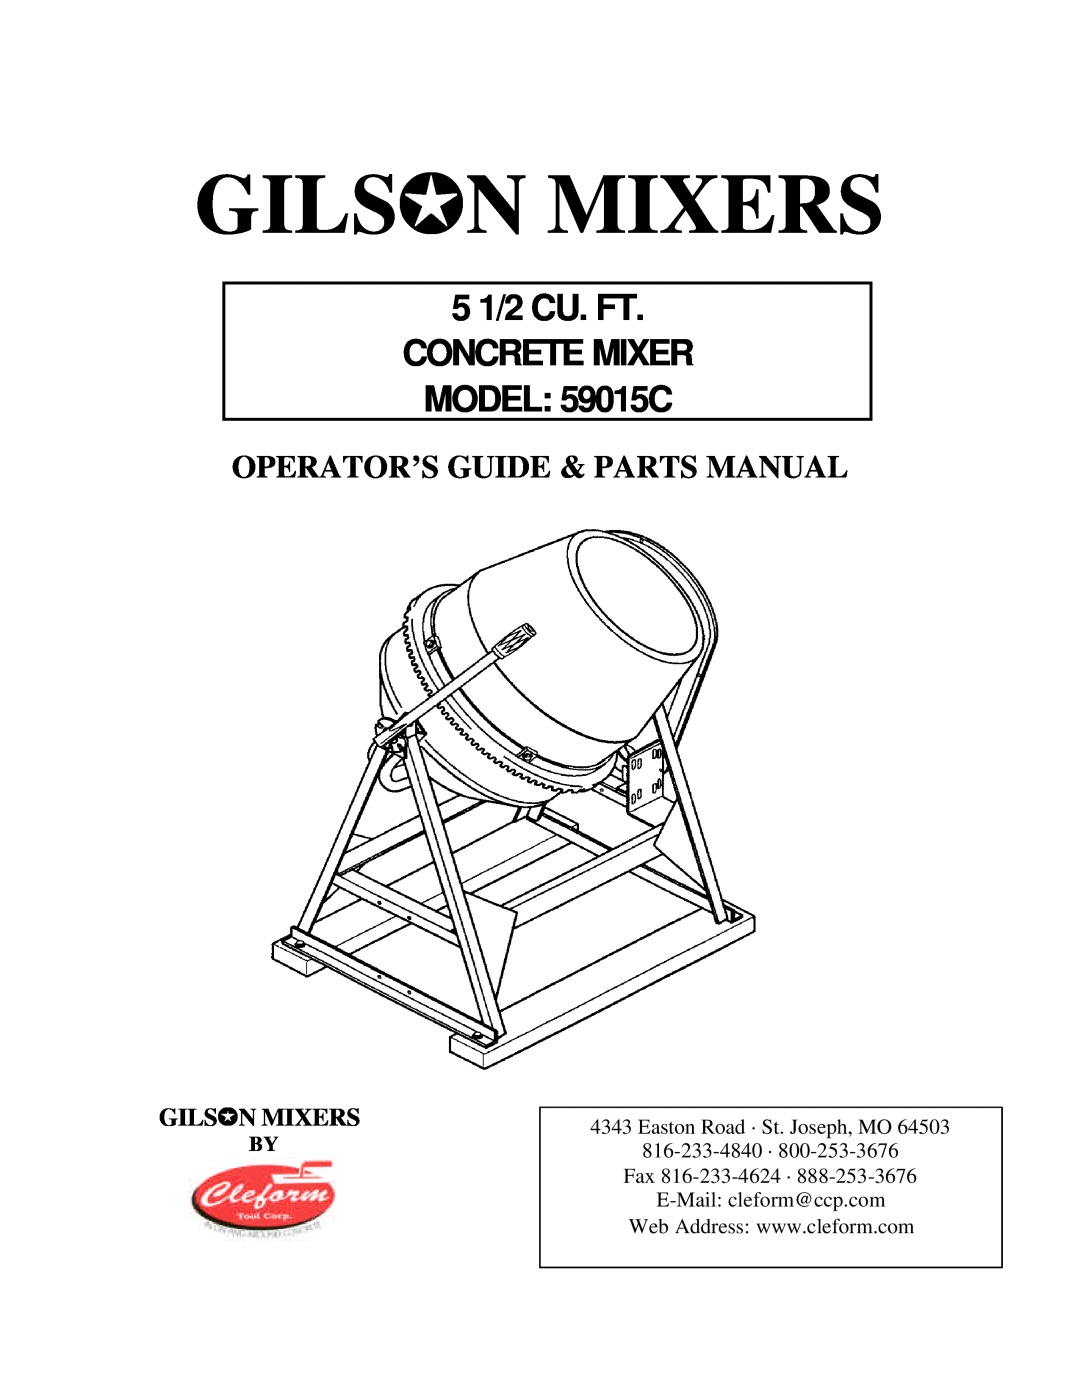 Gilson manual Gilsjn Mixers, 5 1/2 CU. FT CONCRETE MIXER MODEL 59015C, Operator’S Guide & Parts Manual 